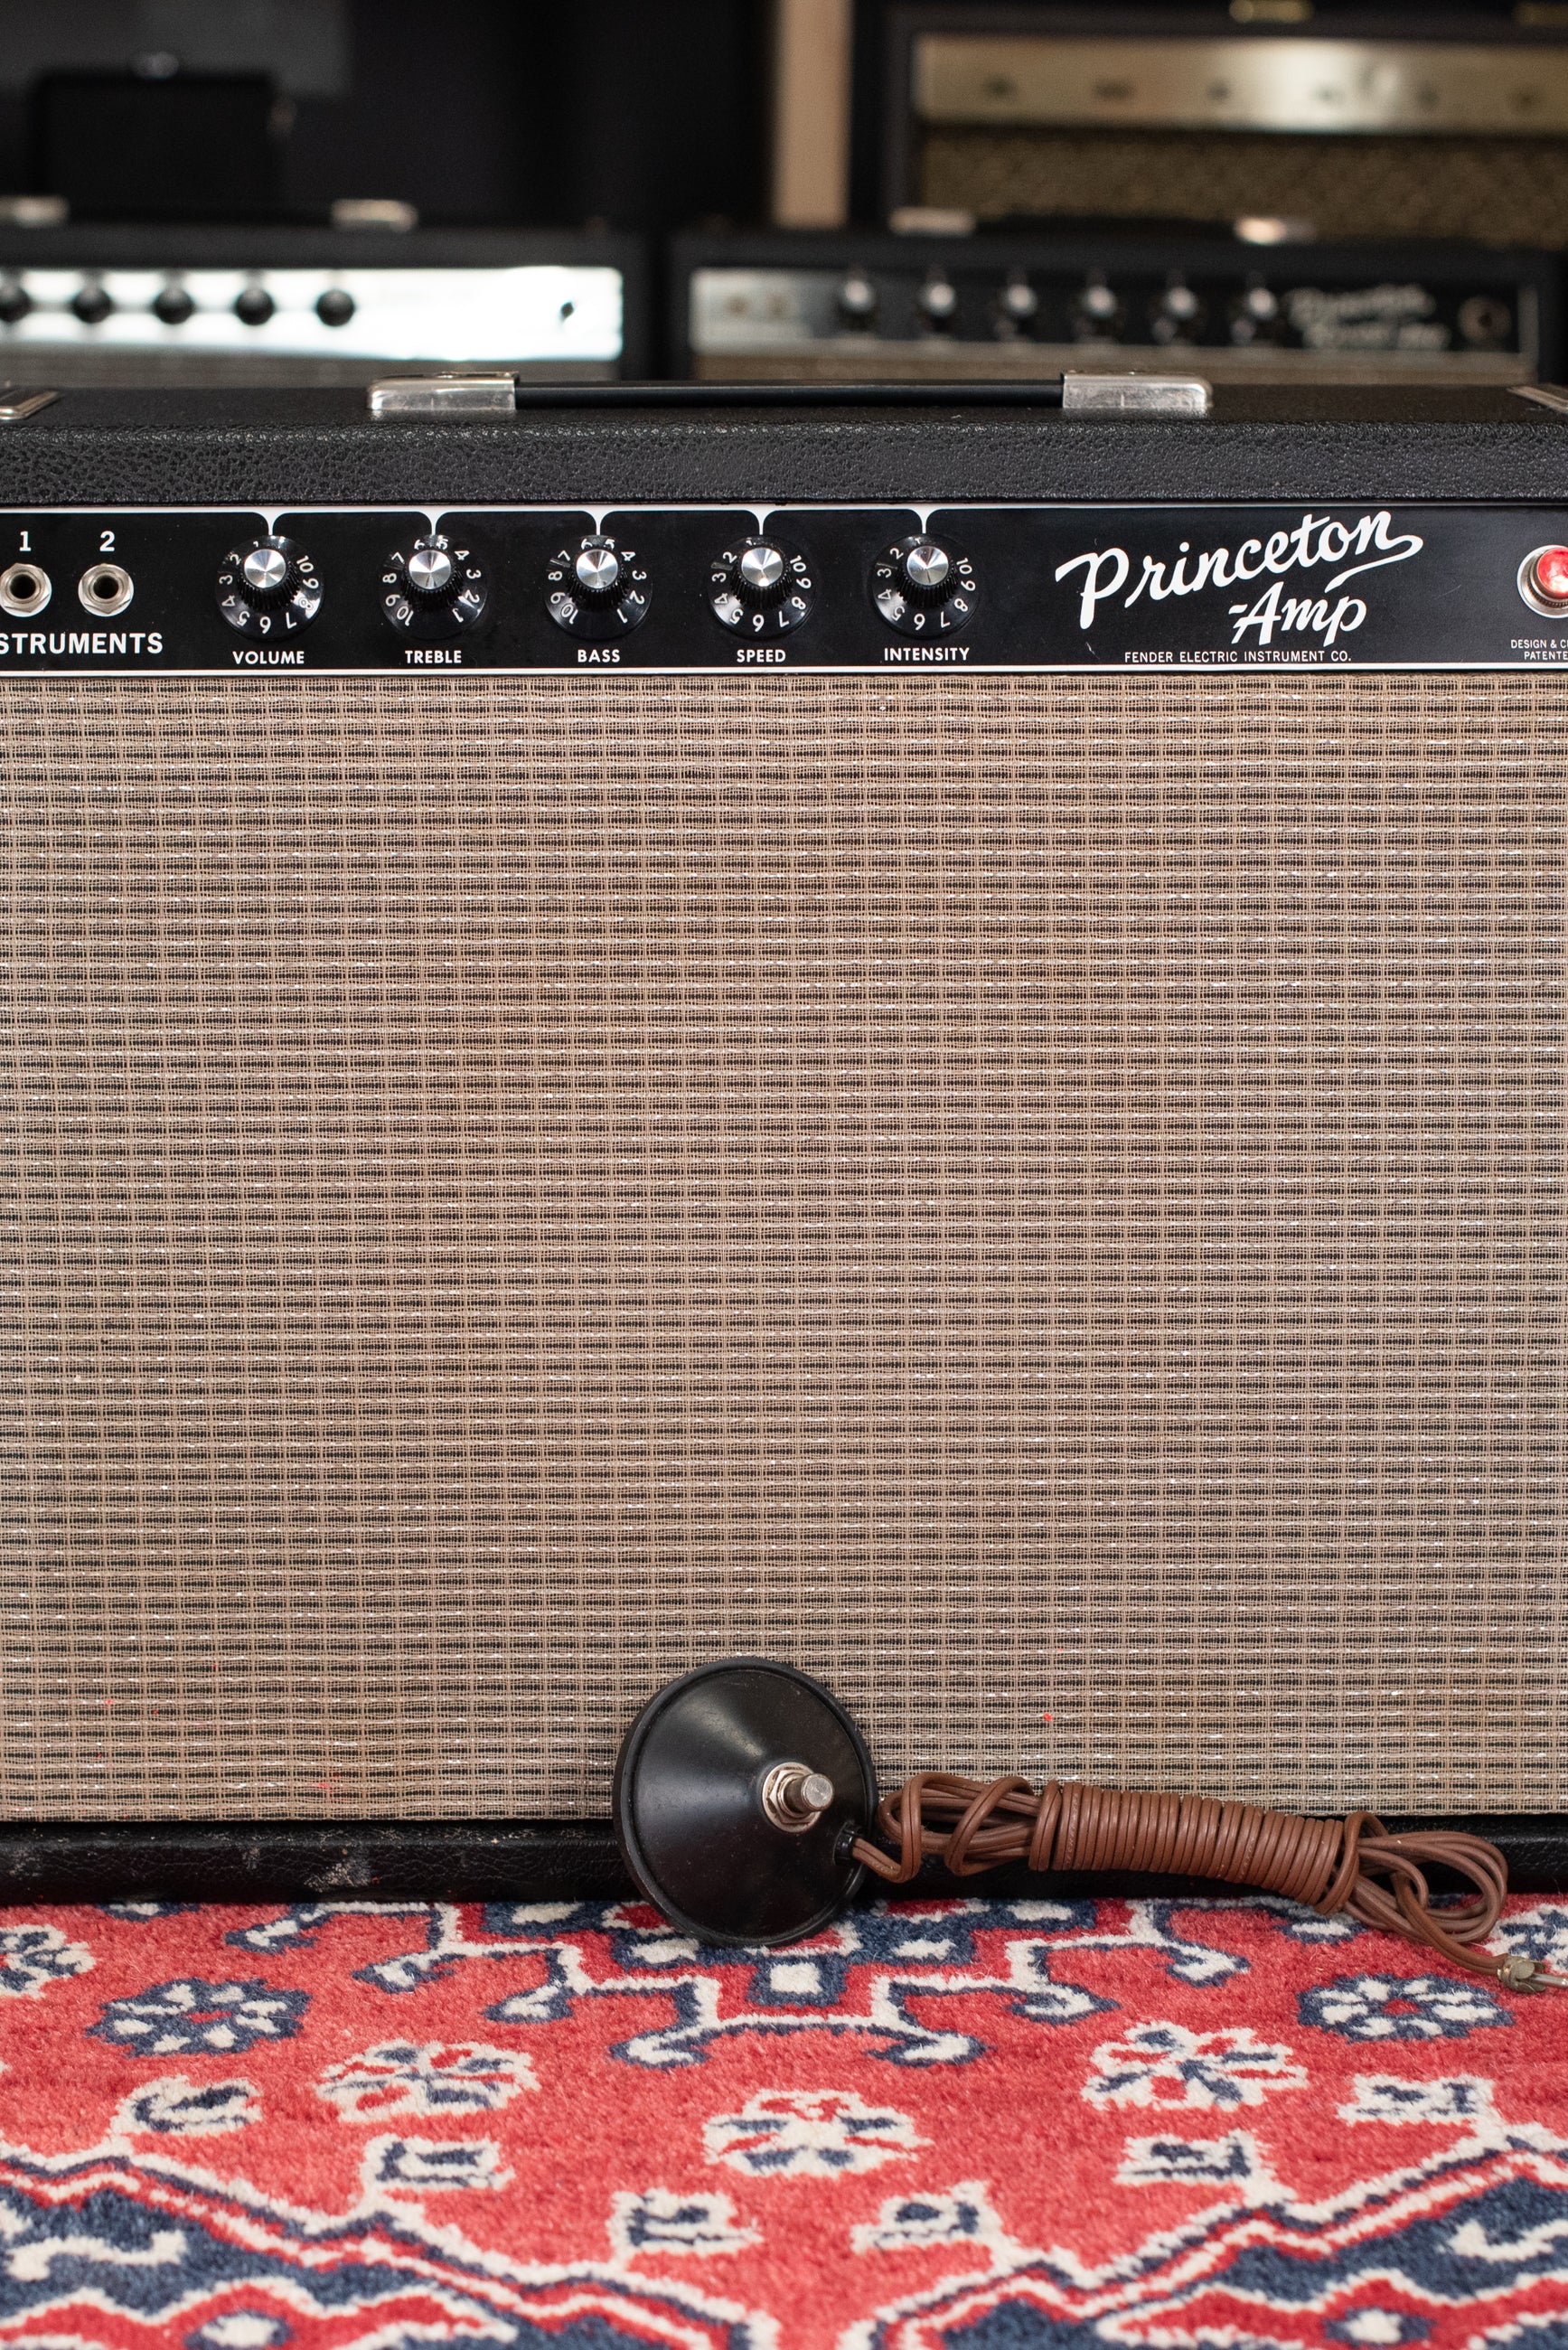 1965 Fender Princeton Amp